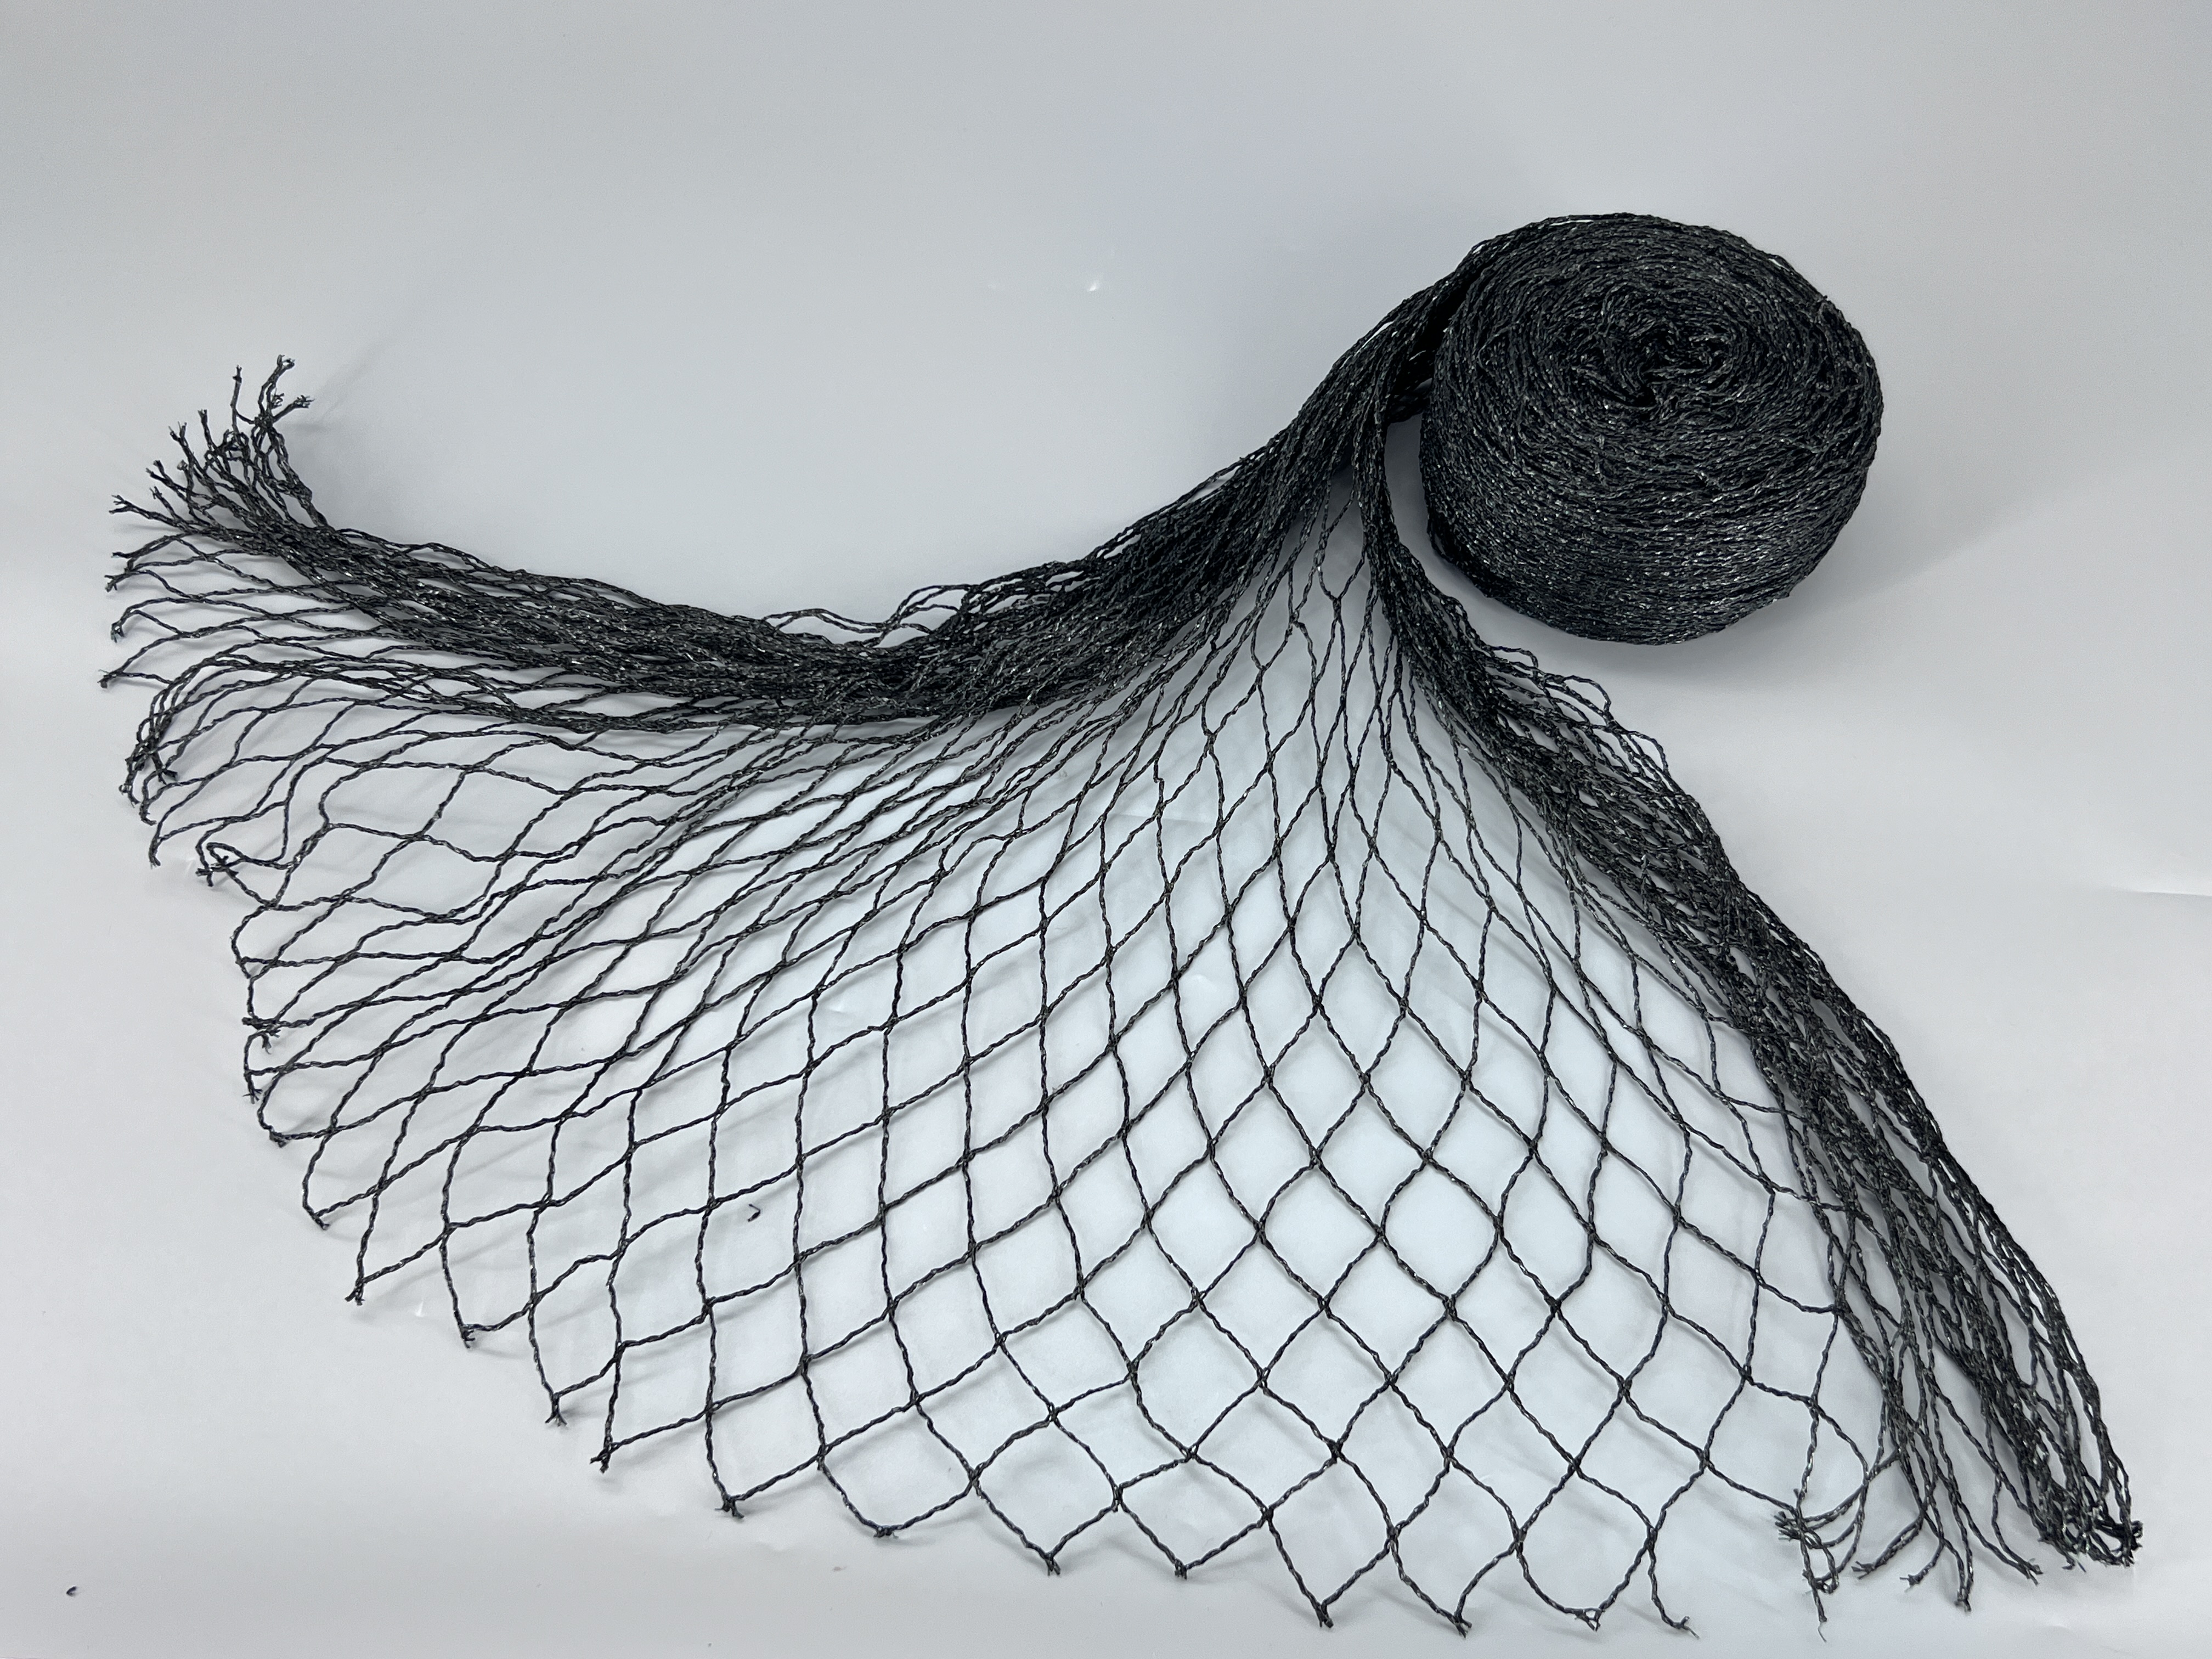 Flat wire rhombus anti-bird net